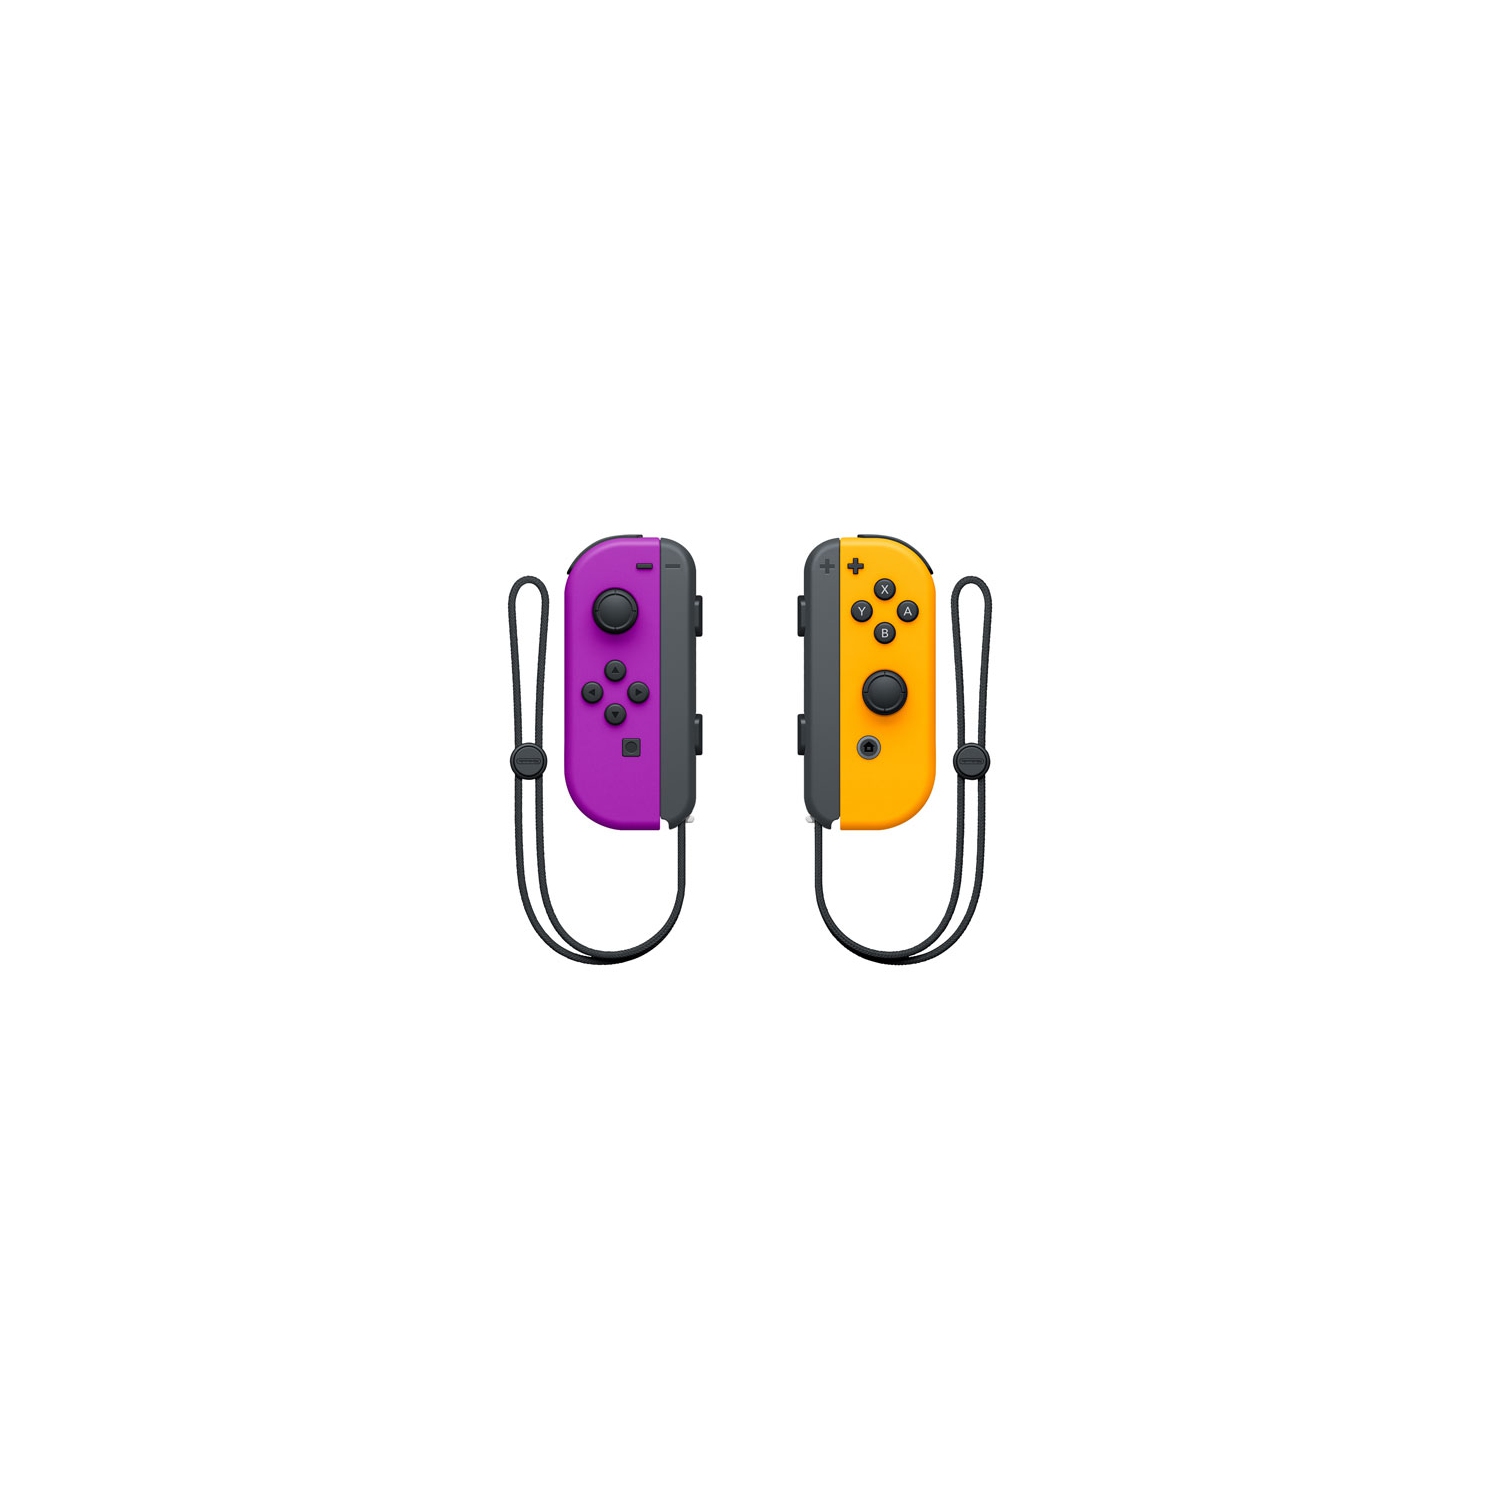 Refurbished (Good) Nintendo Switch Original Left and Right Joy-Con Controllers - Neon Purple/Neon Orange